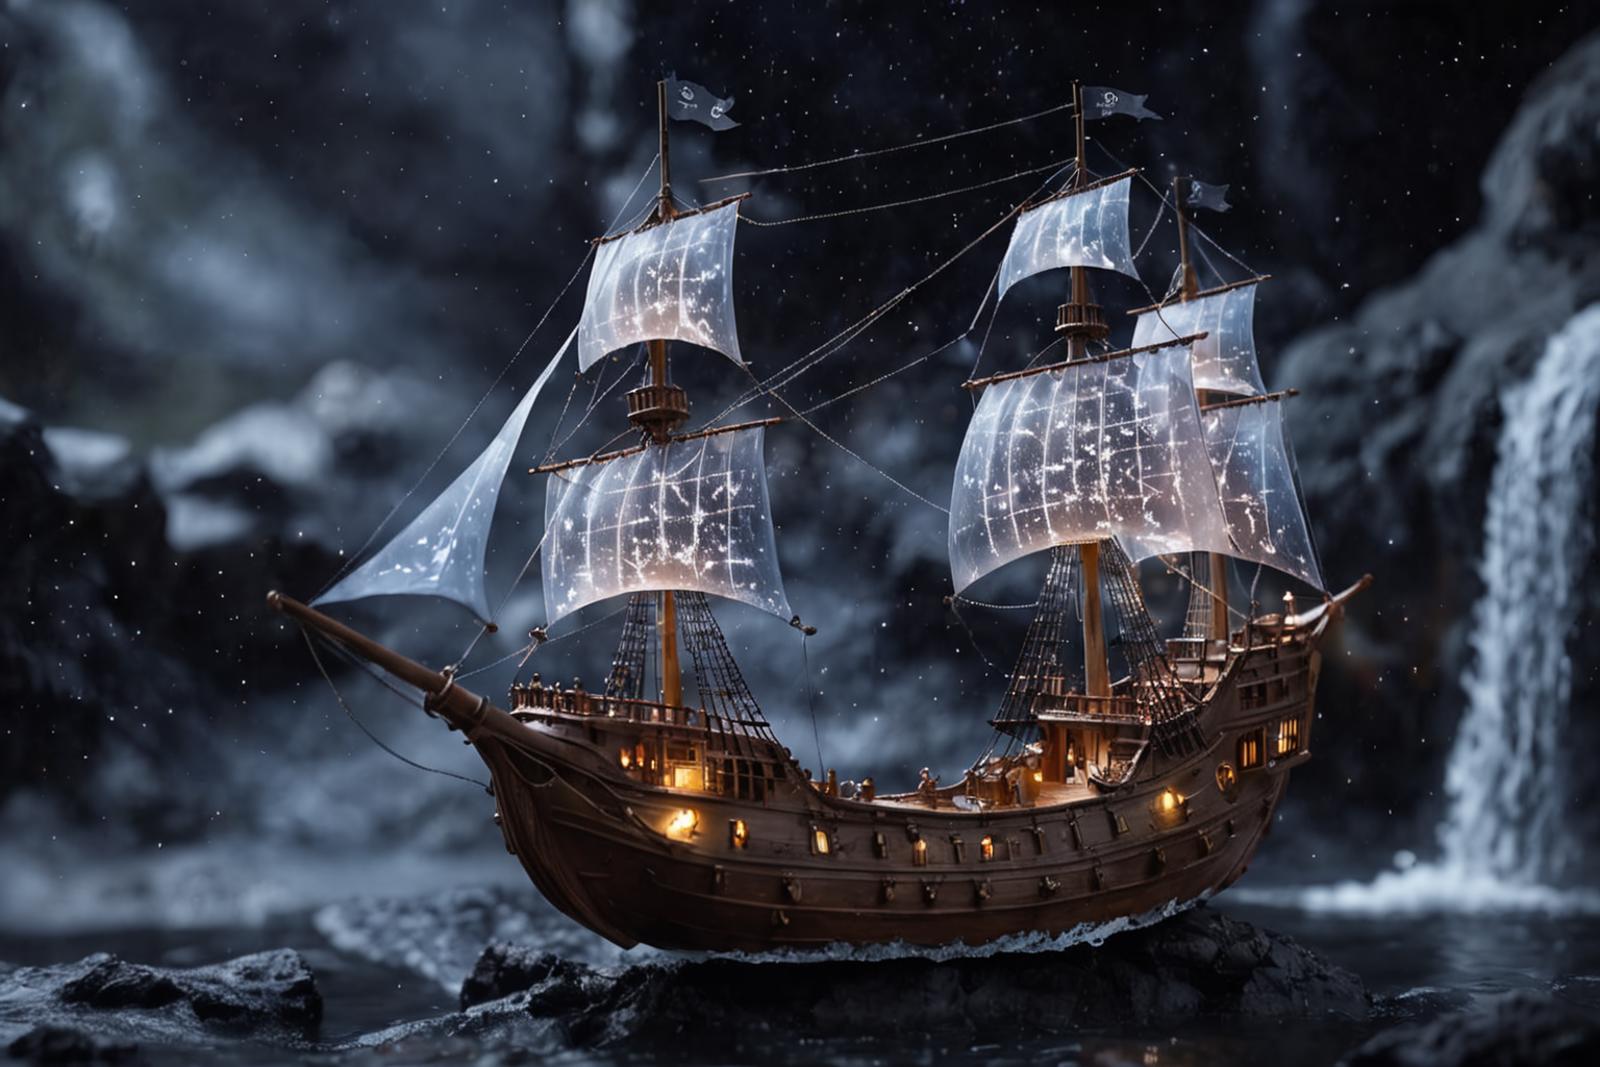 Illuminated Ship Model on a Nighttime Ocean Scene